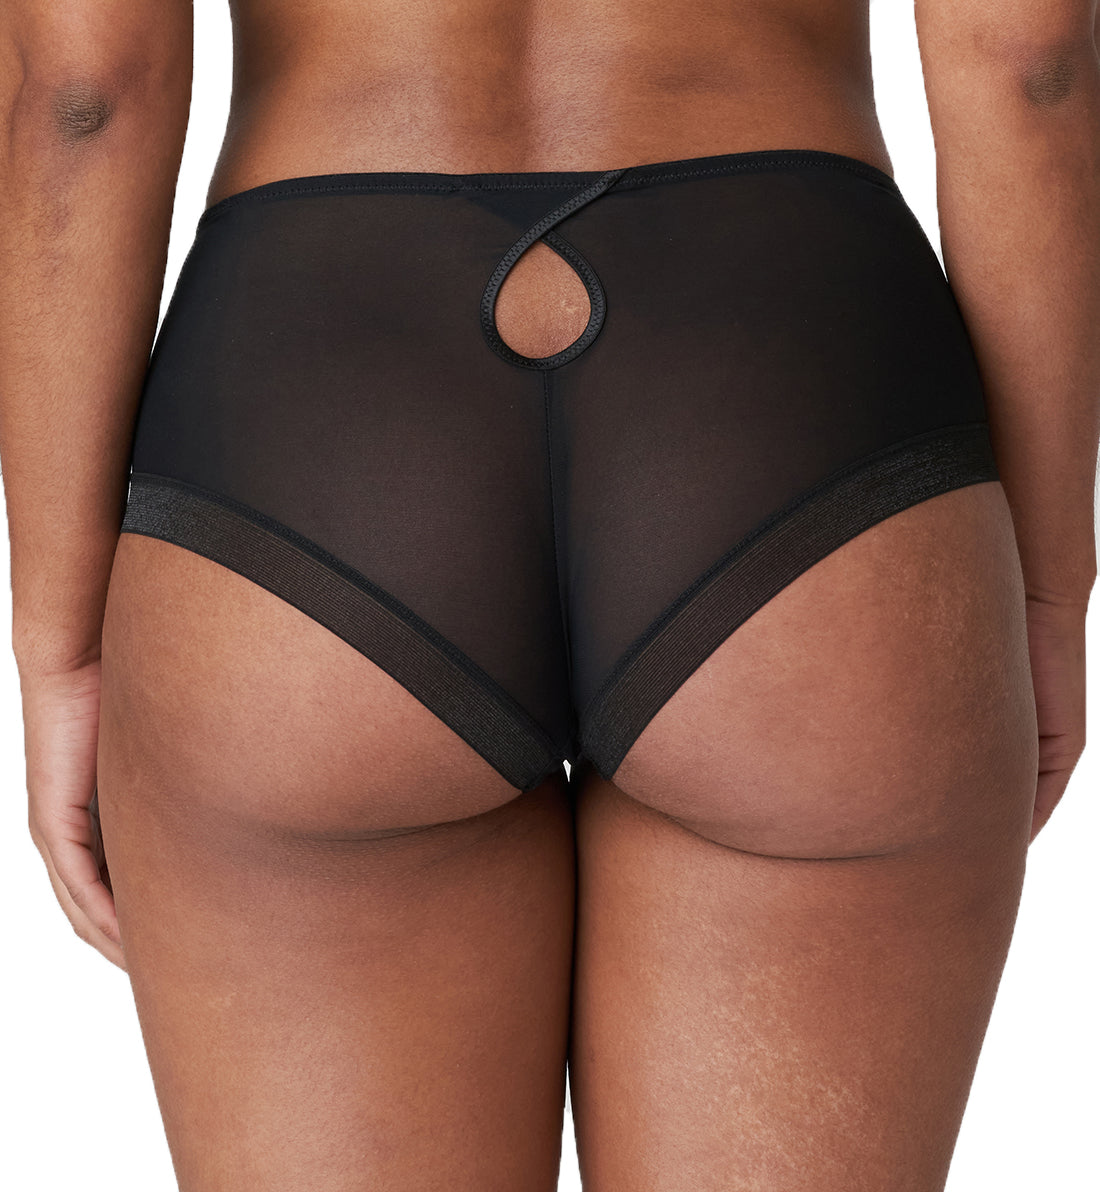 PrimaDonna Twist Aprodisia Matching Hotpants Panty (0542162),Small,Black - Black,Small